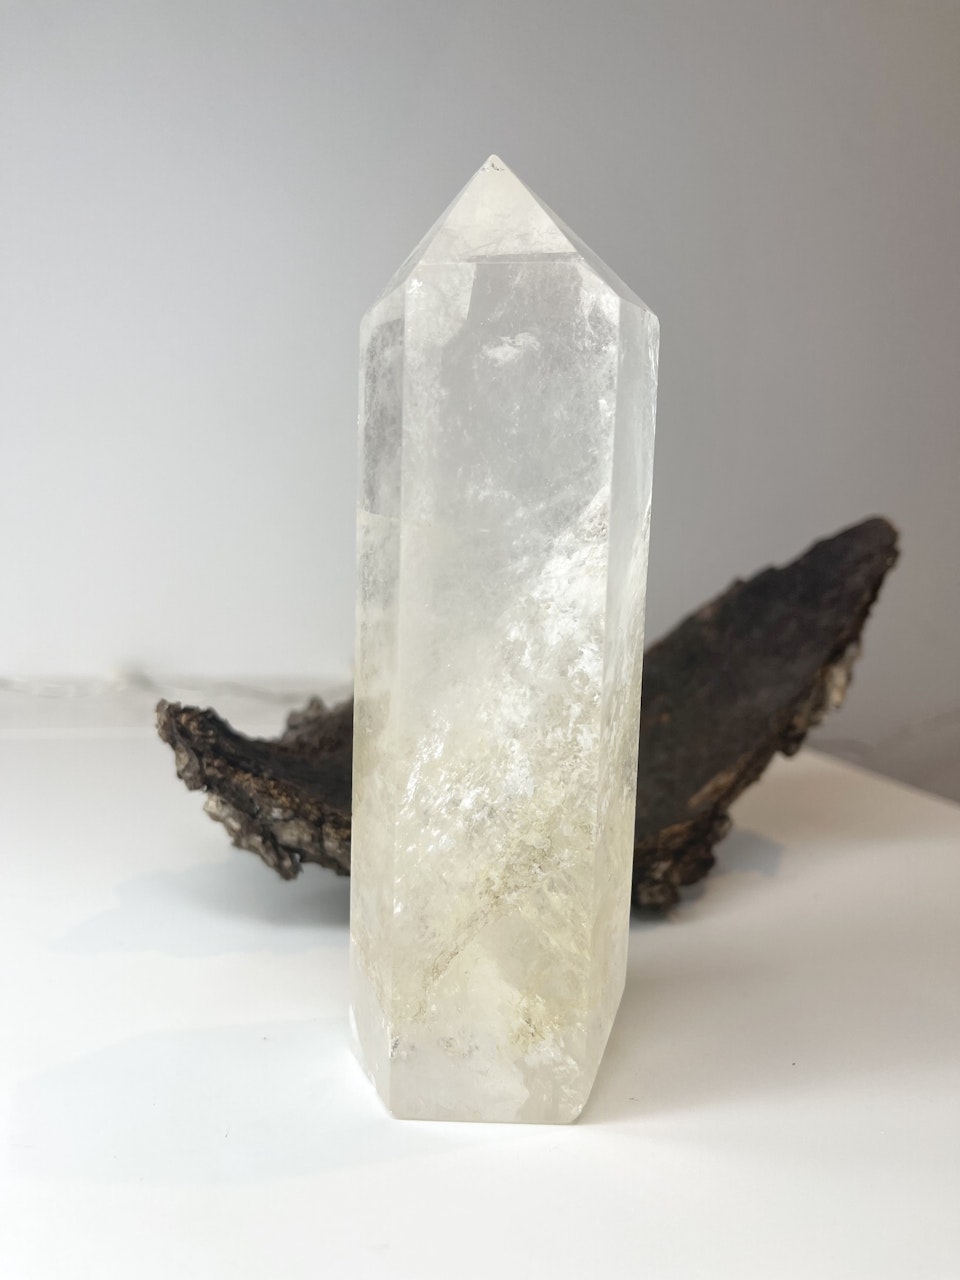 Bergkristall, clear quartz, polerad kristallspets #B